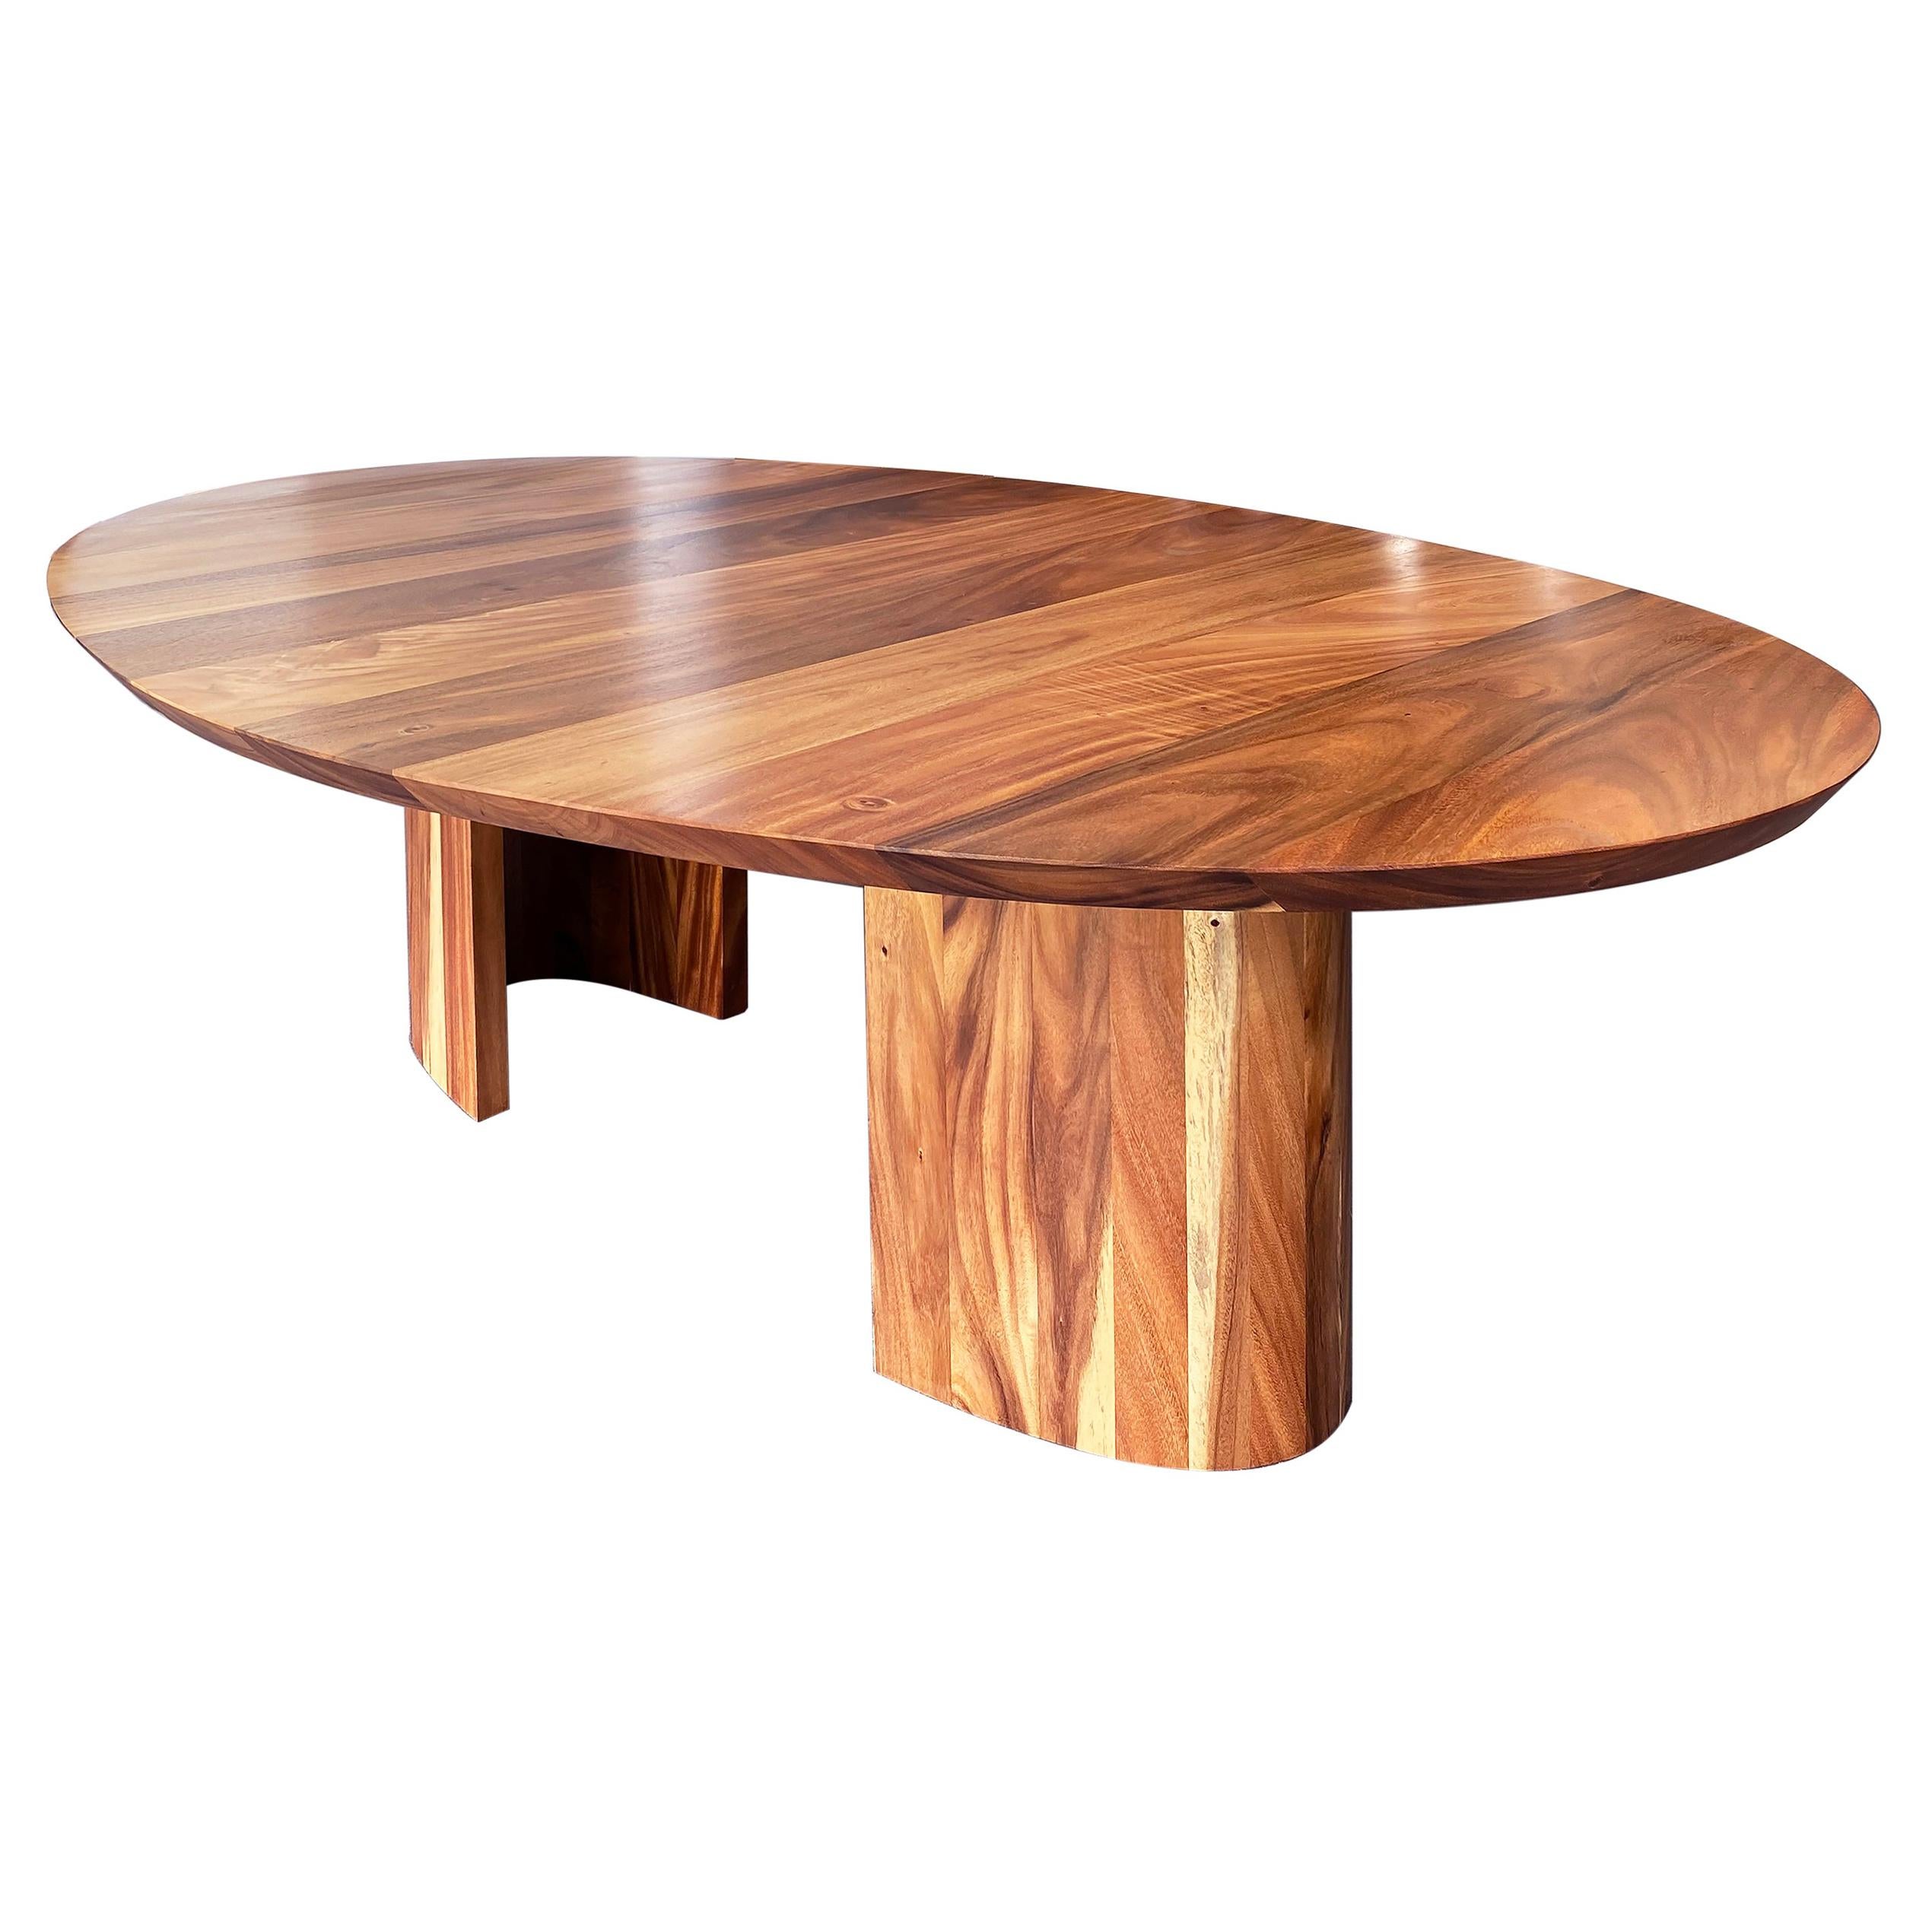 Mesa Barlovento Table, Maria Beckmann, Represented by Tuleste Factory